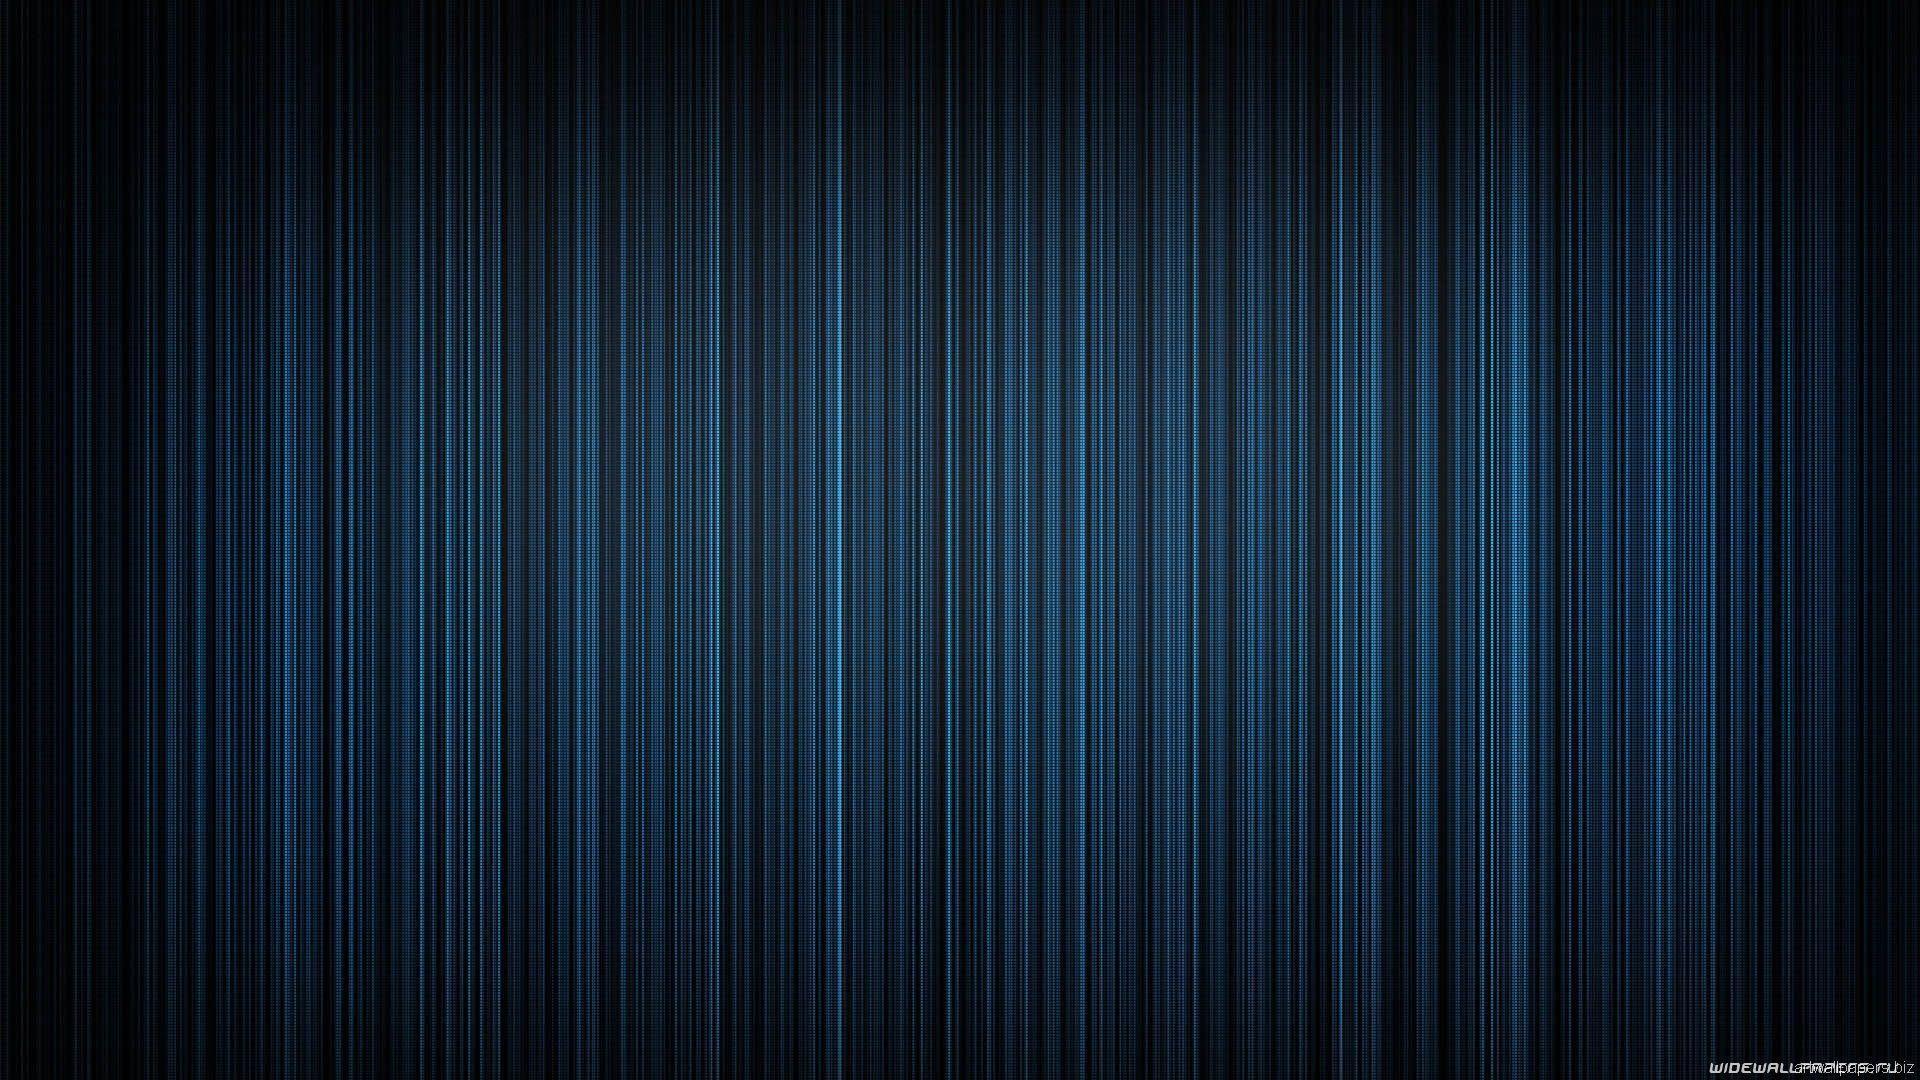 Abstract Desktop HD Wallpaper 1920x1080p wallpaper download